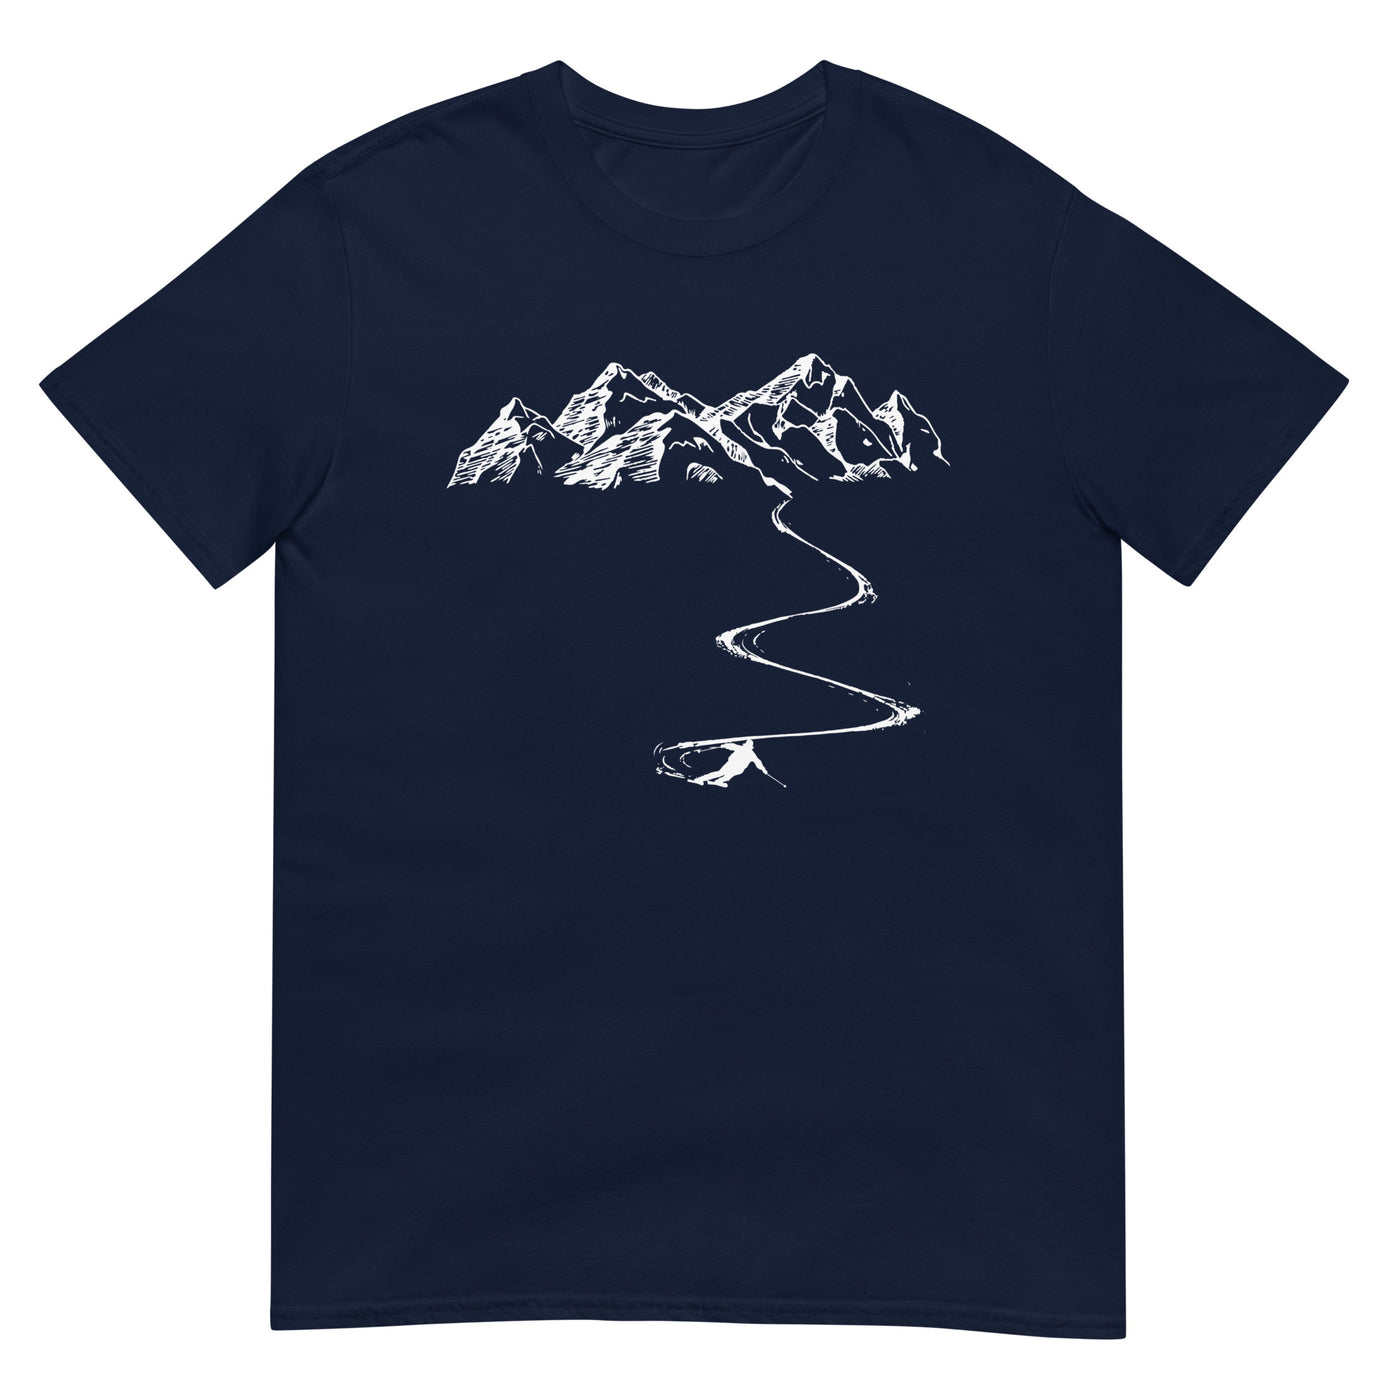 Berge - Kurve Linie - Skifahren - T-Shirt (Unisex) klettern ski xxx yyy zzz Navy